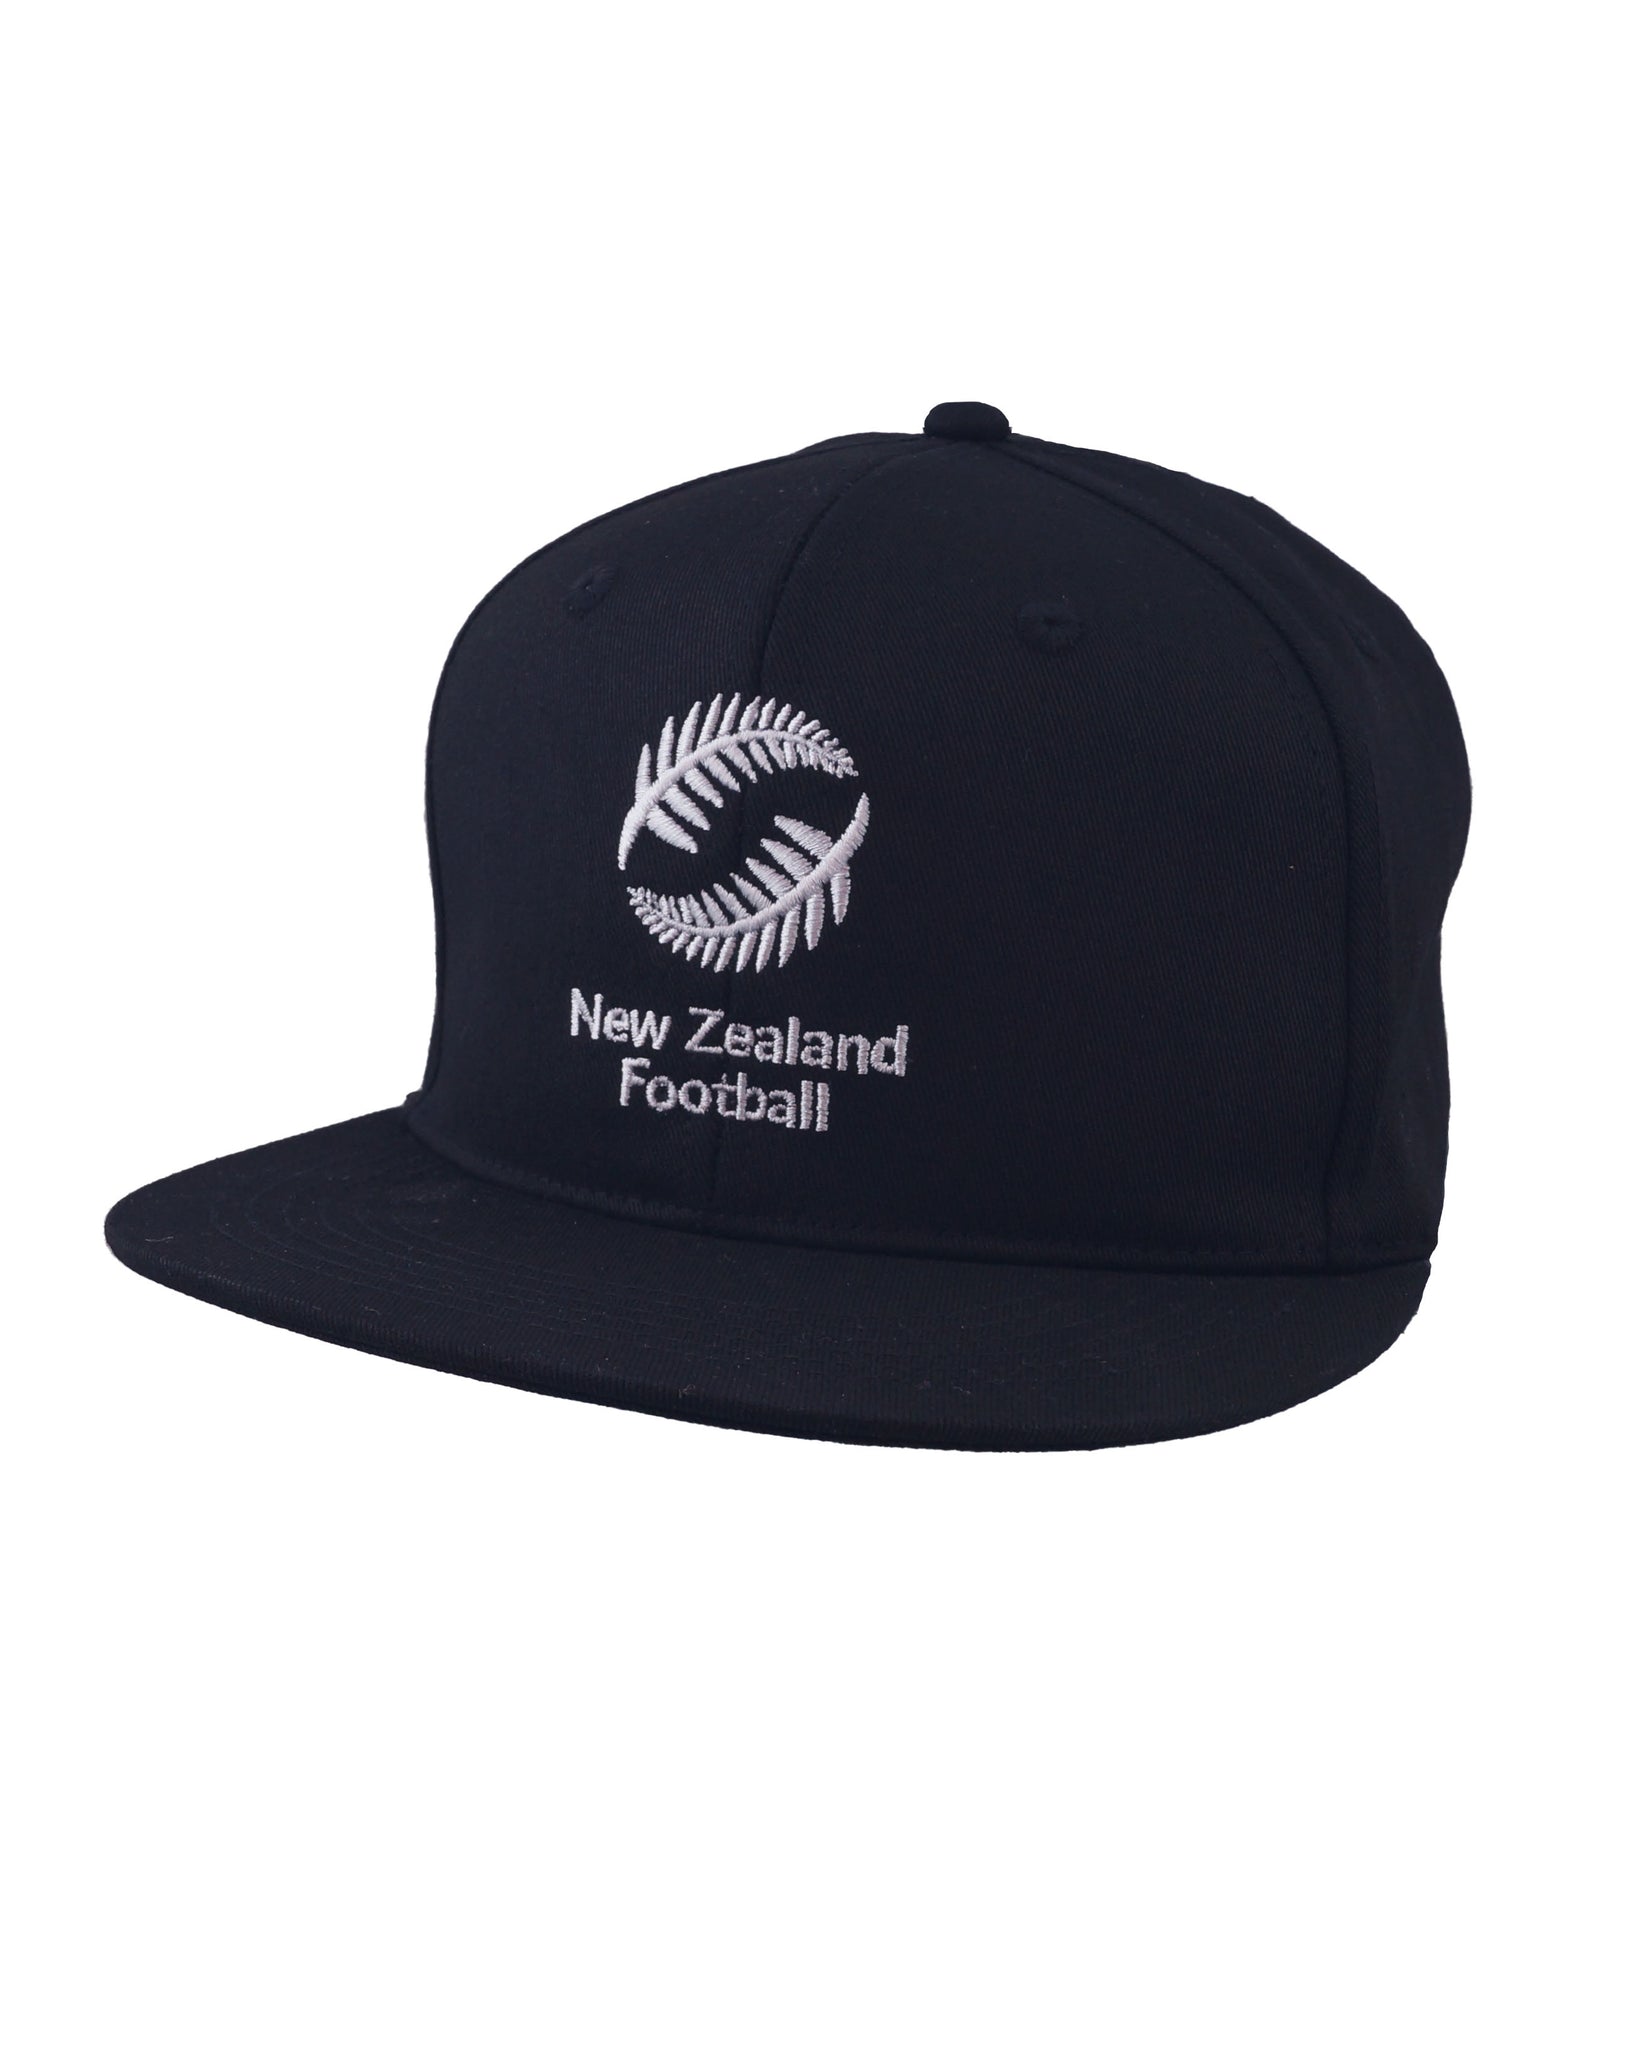 New Zealand Football Flat Peak Cap Black